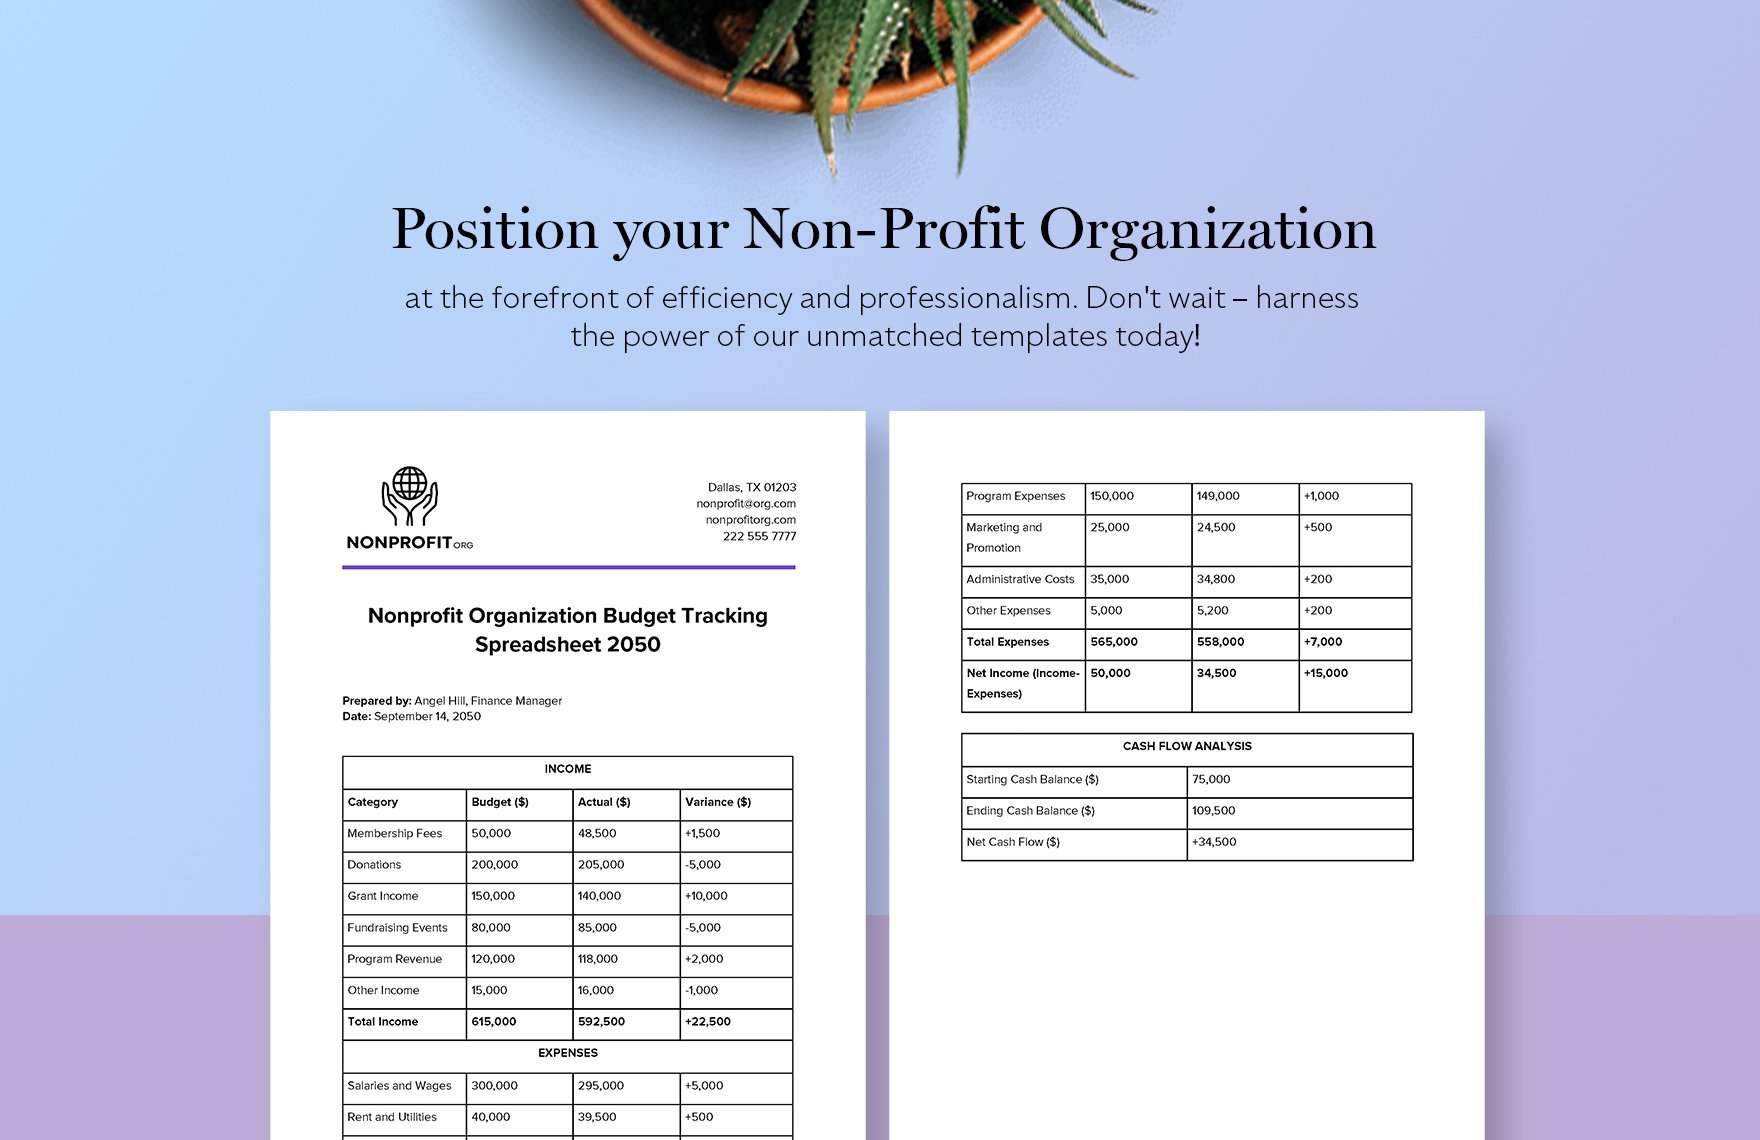 Nonprofit Organization Budget Tracking Spreadsheet Template